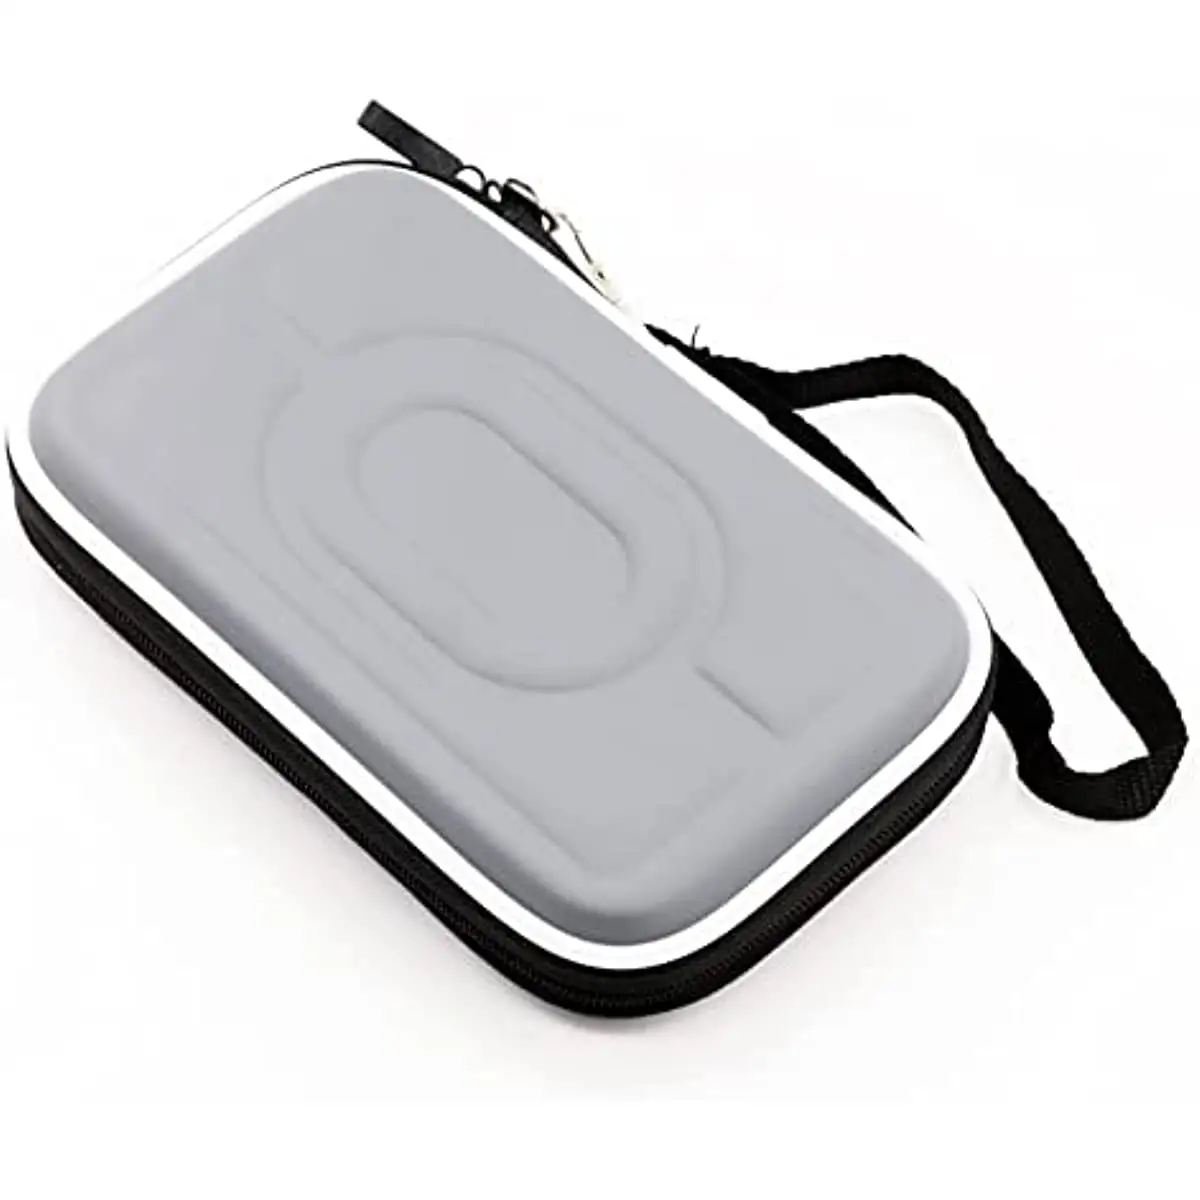 NSLikey กระเป๋าถือ,เคสสำหรับเกมบอย Advance Color Pocket GBA DS Lie EVA เคสป้องกันใส่ของ